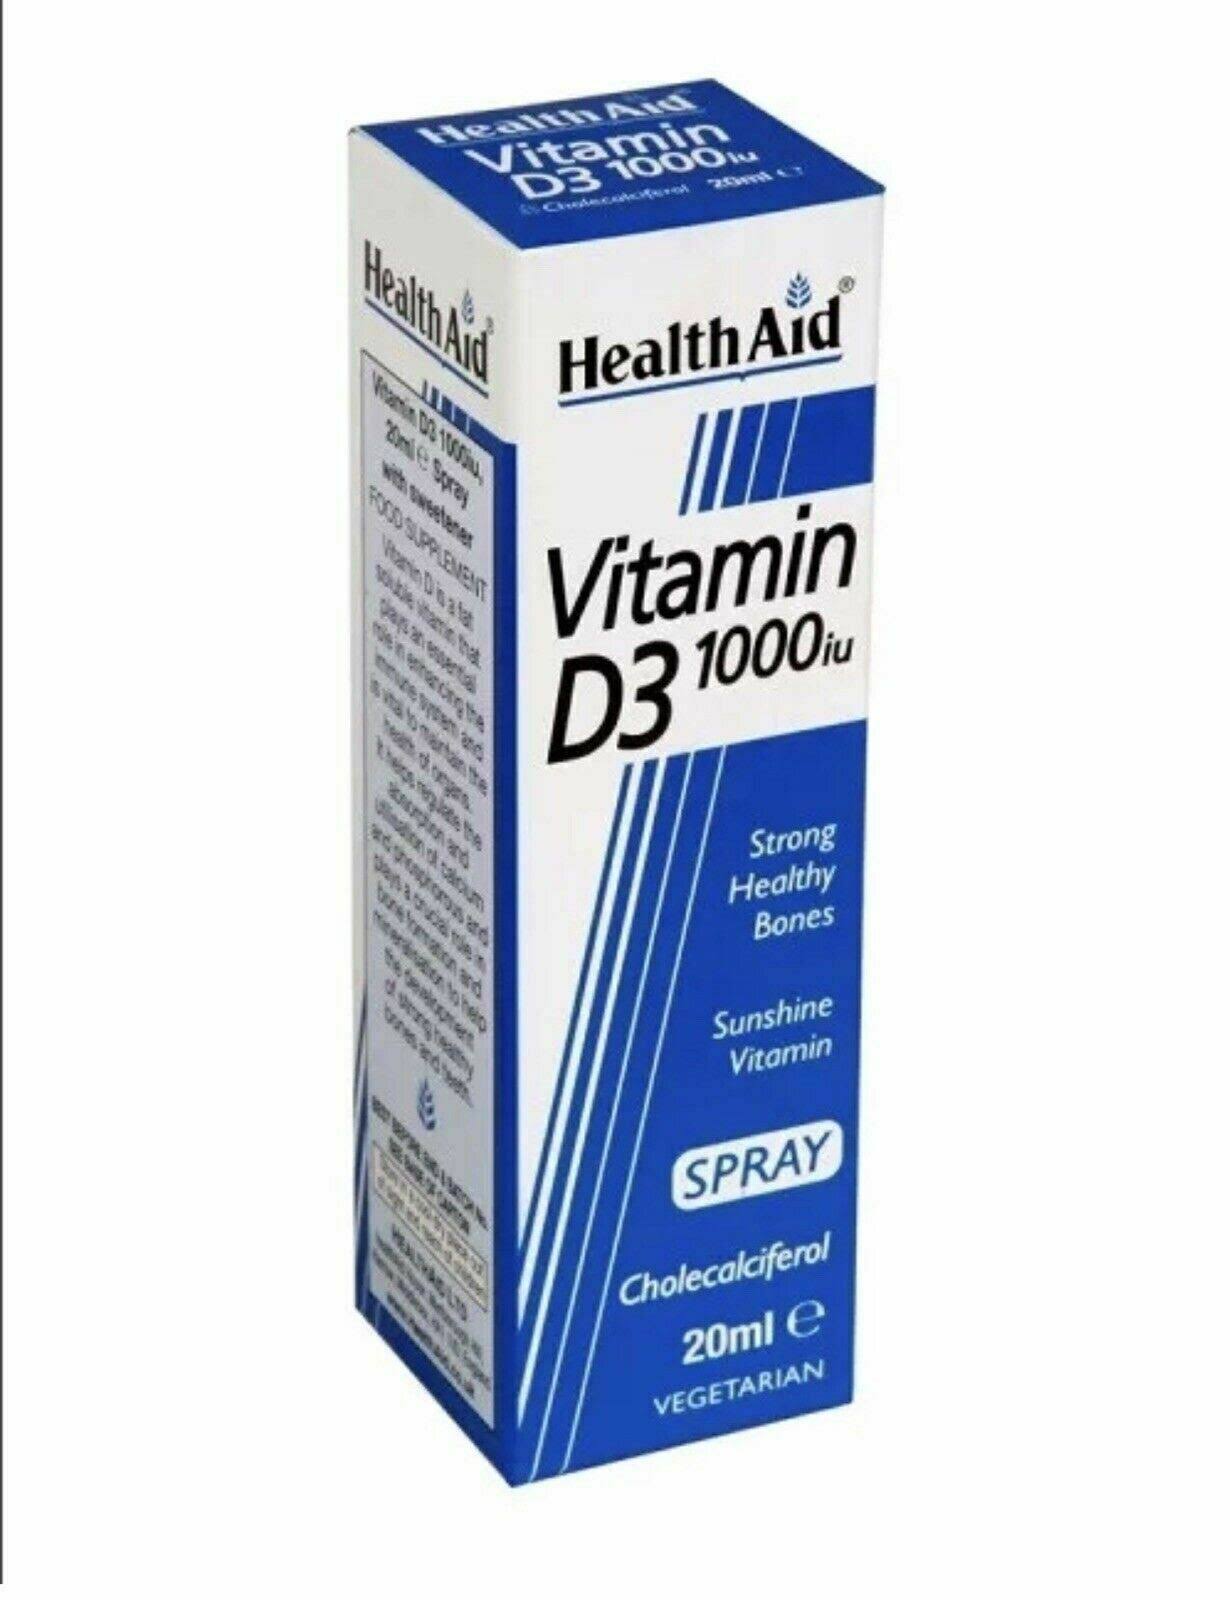 HealthAid Vitamin D3 1000iu Spray - 20ml